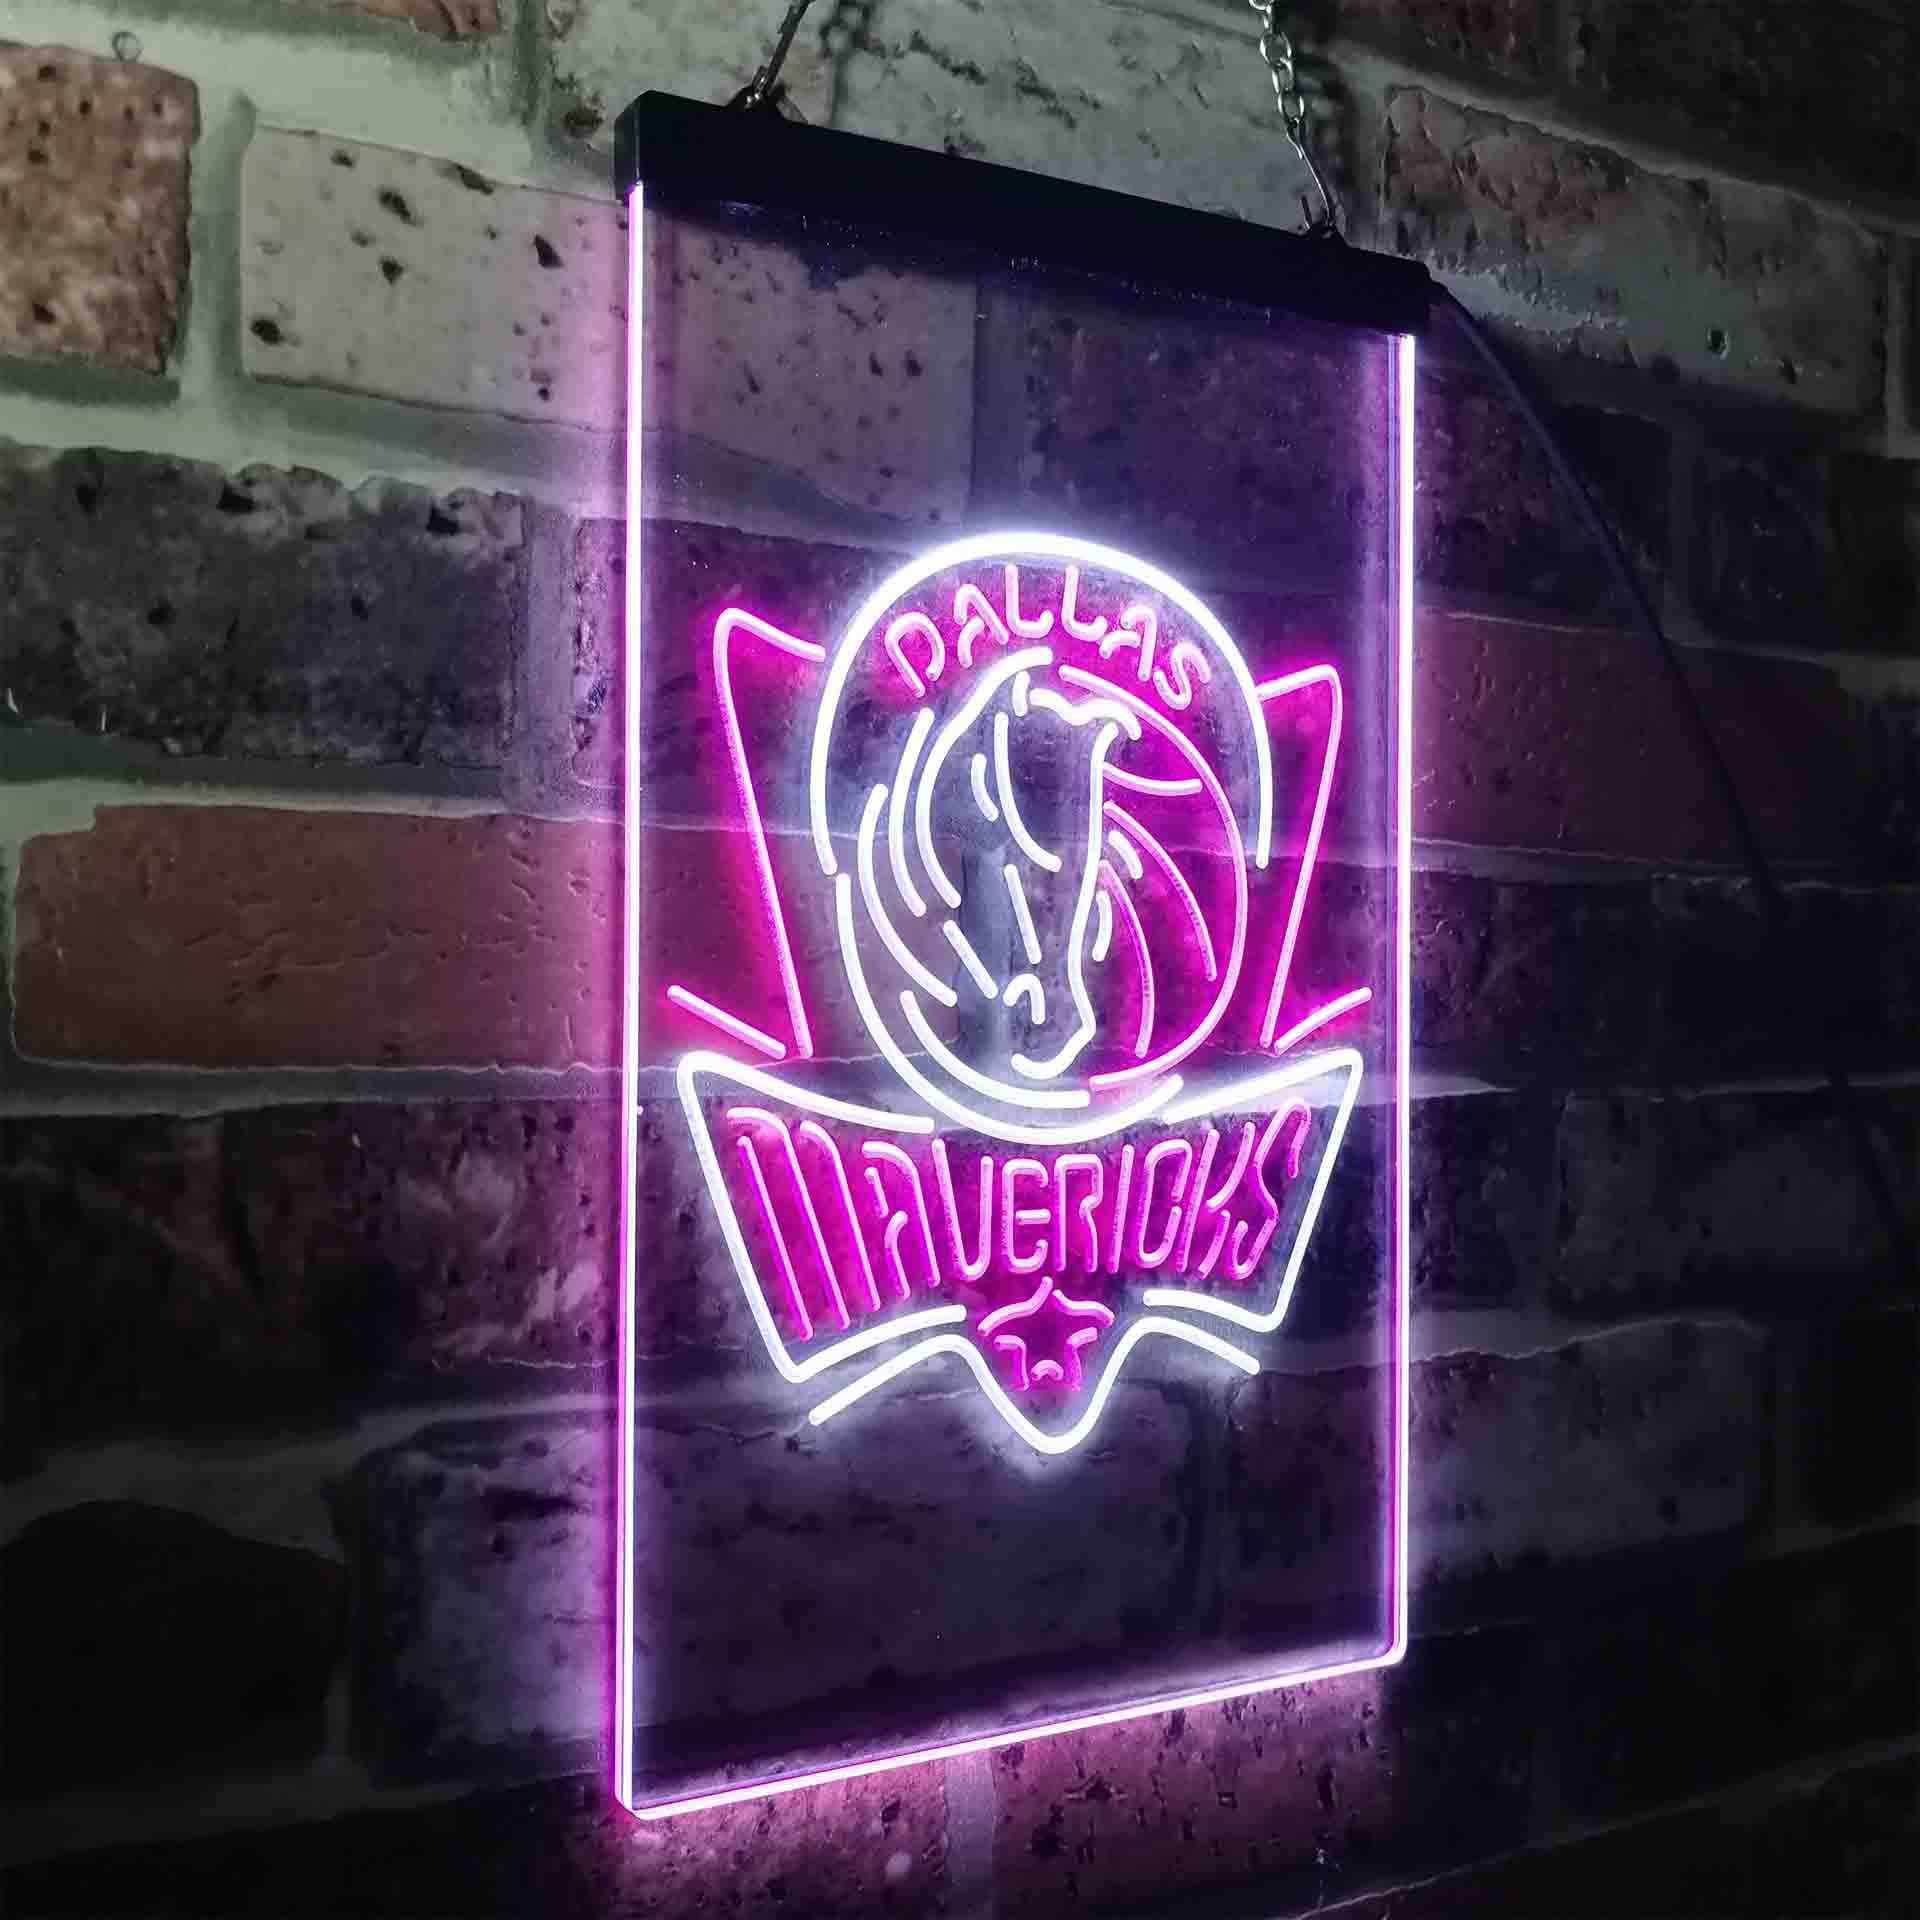 Mavericks Pub Club League Group LED Neon Sign